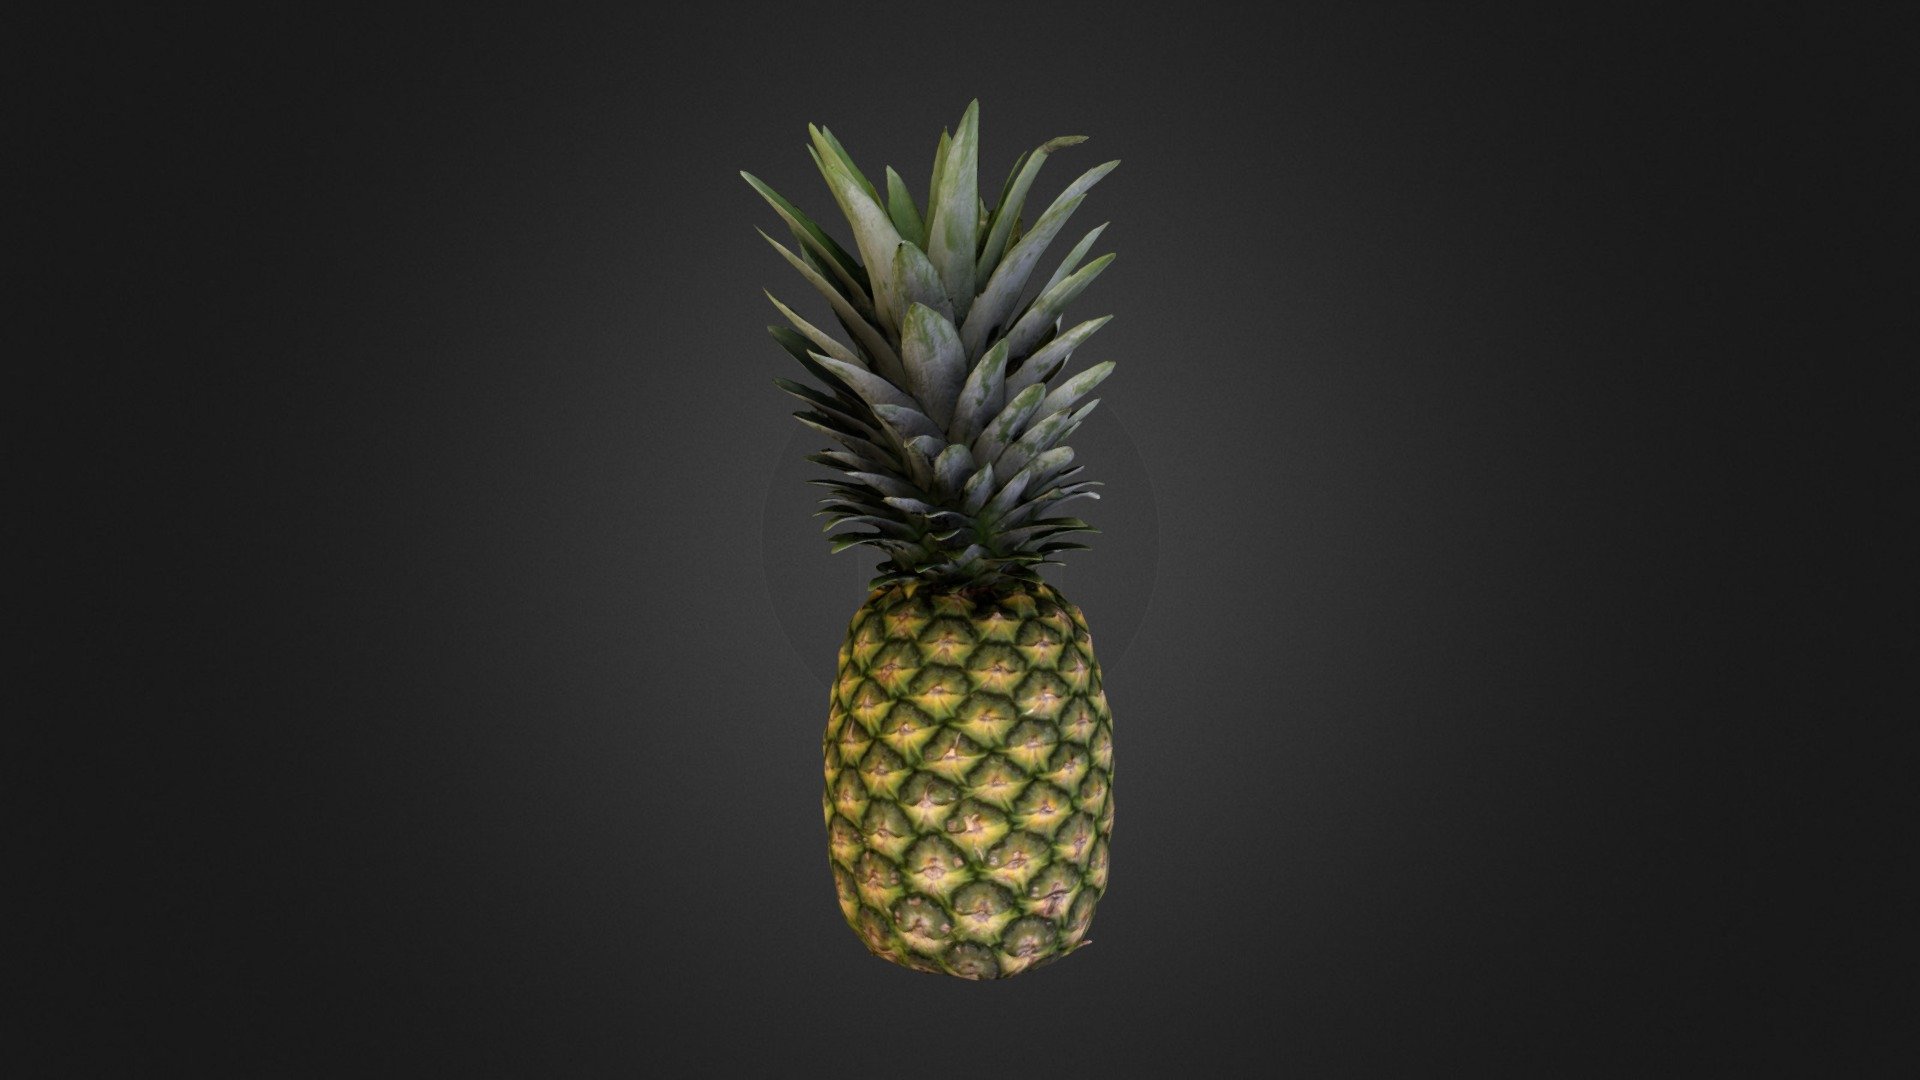 Pineapple (Ananas) - Buy Royalty Free 3D model by 3DScan4You.de (@3dscan4you) 3d model